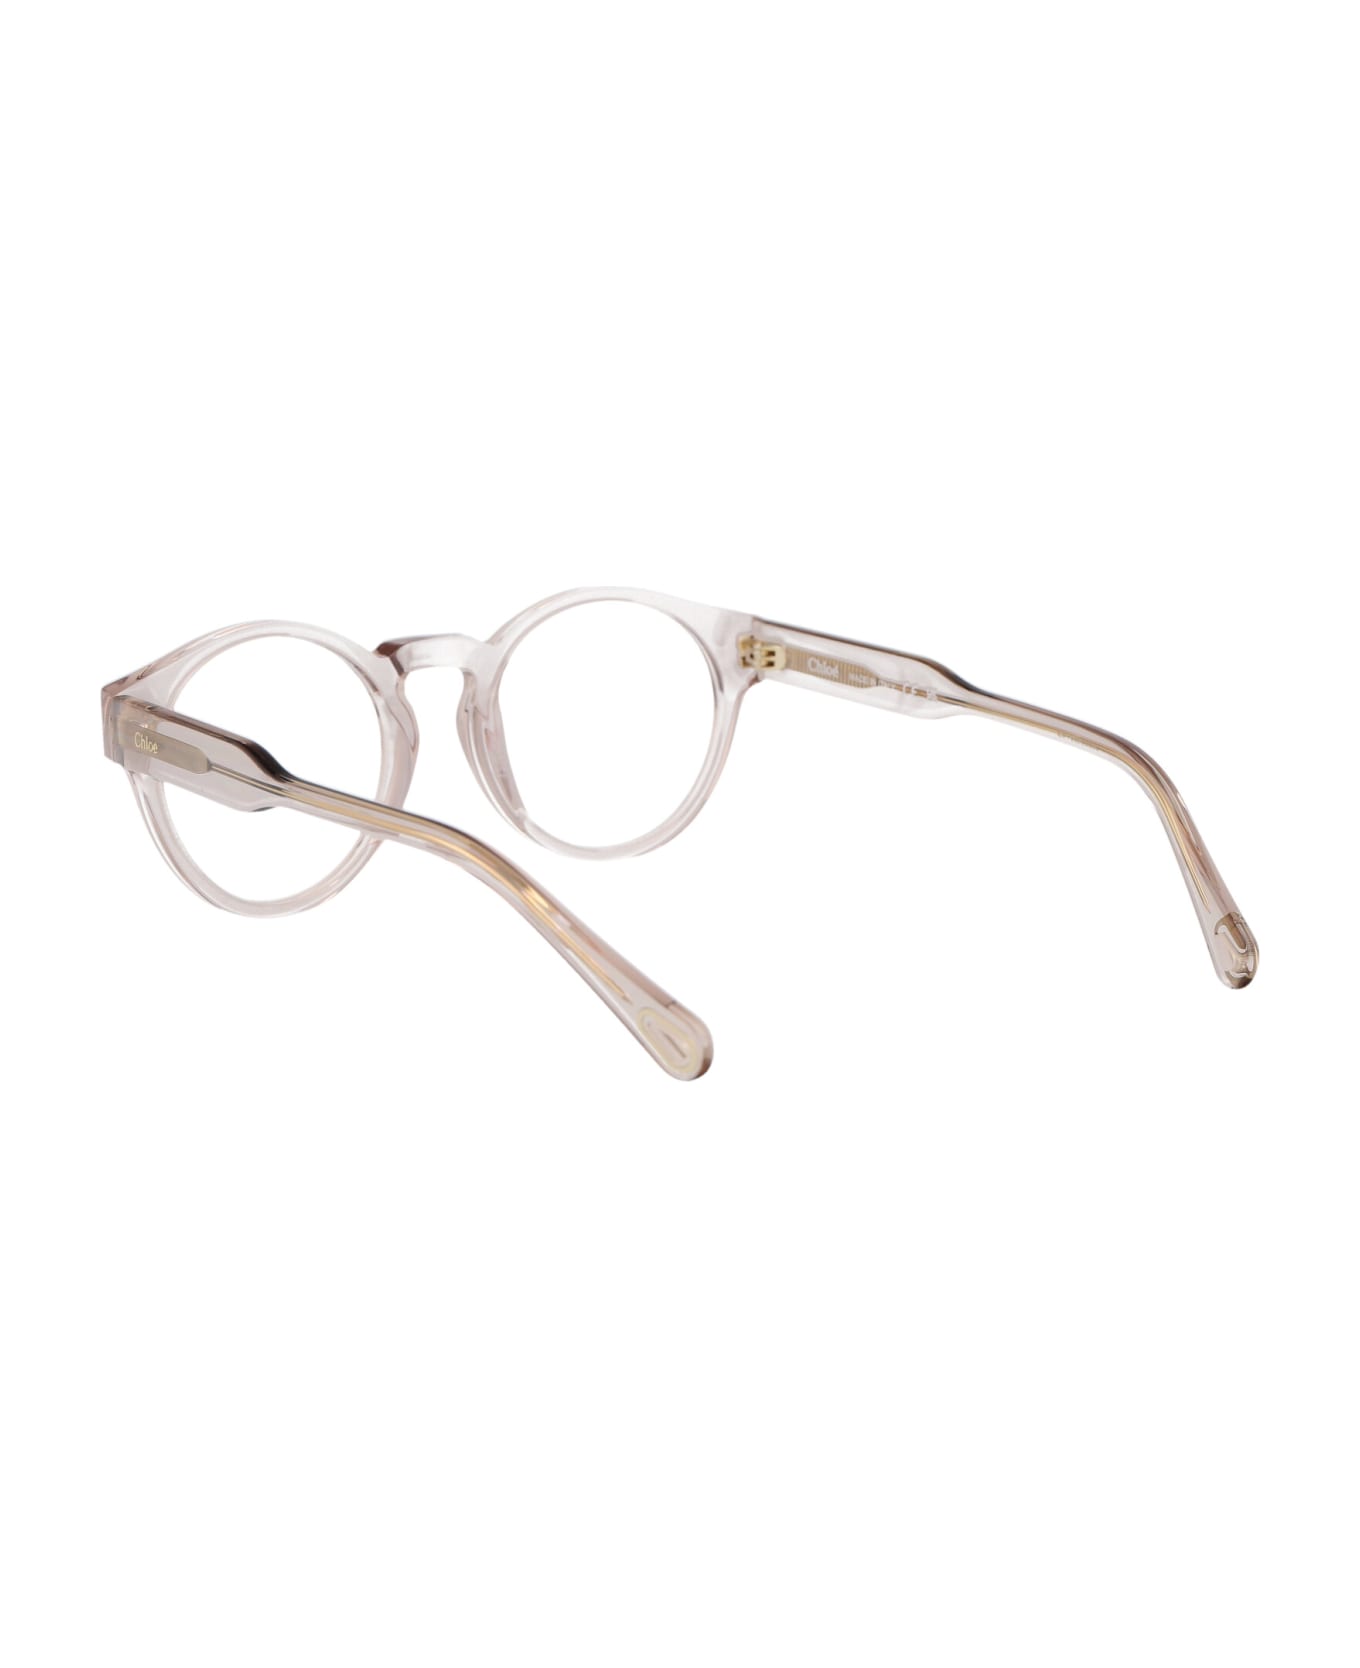 Chloé Eyewear Ch0159o Glasses - 005 NUDE NUDE TRANSPARENT